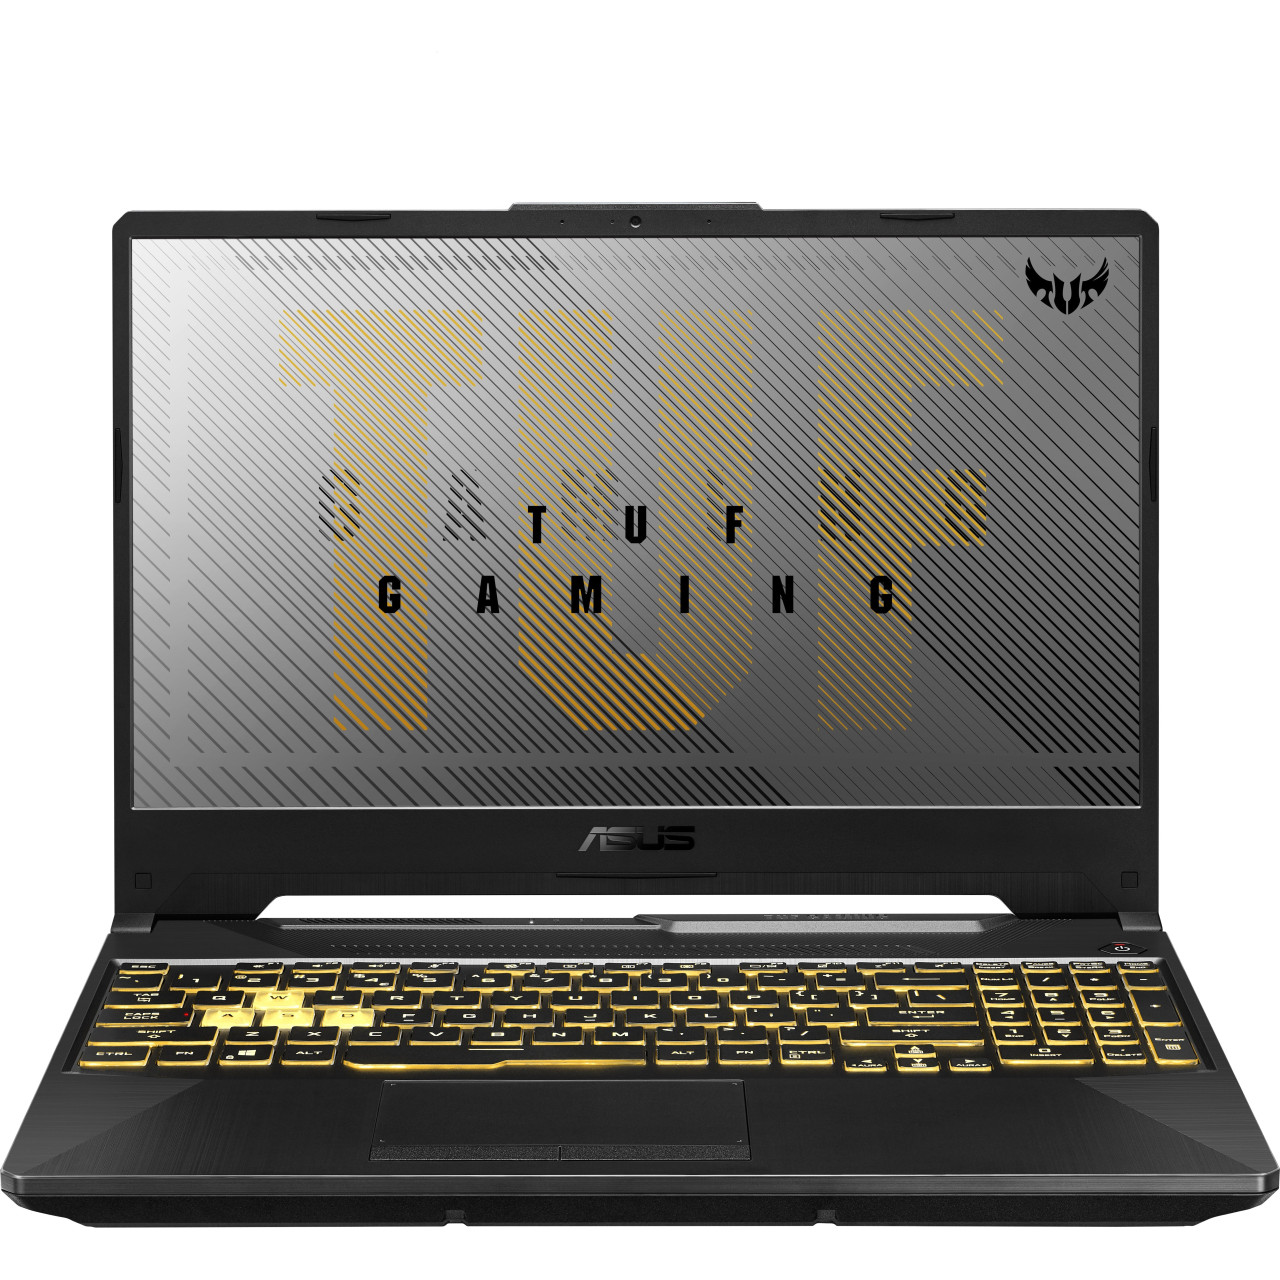 Asus A15 TUF506IH-RS74 15.6" Gaming Notebook - Full HD - 1920 x 1080 - AMD Ryzen 7 4800H 2.90 GHz - 16 GB Total RAM - 512 GB SSD